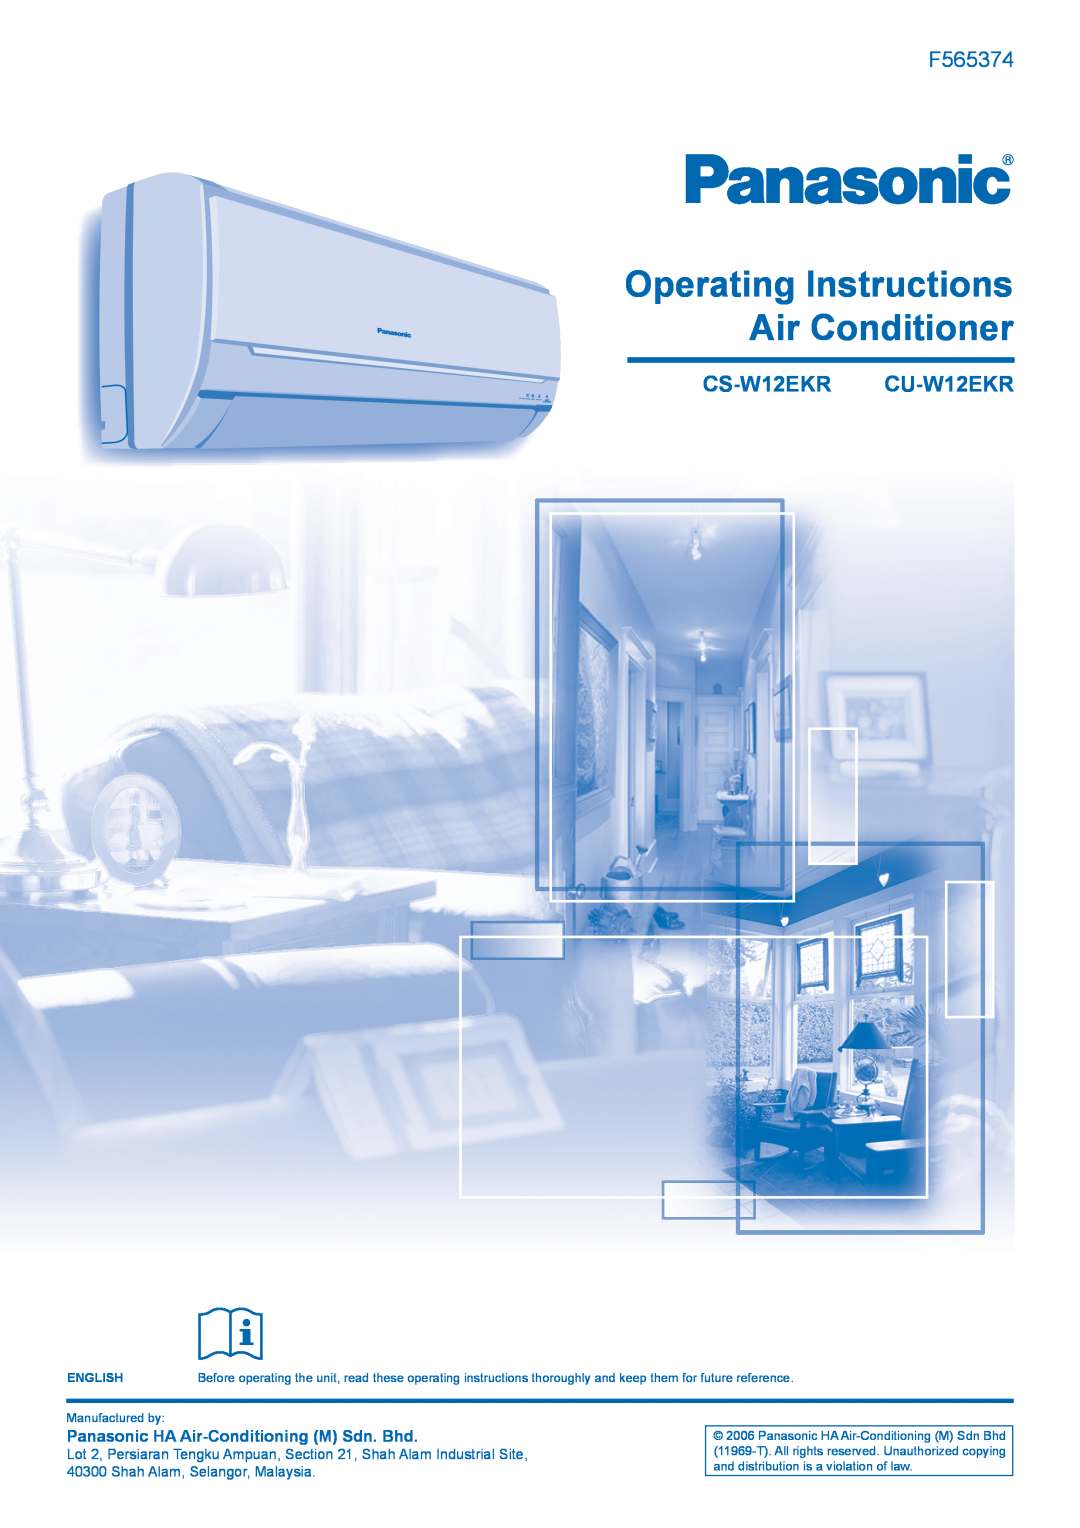 Panasonic operating instructions Operating Instructions Air Conditioner, F565374, CS-W12EKR CU-W12EKR, English, Power 